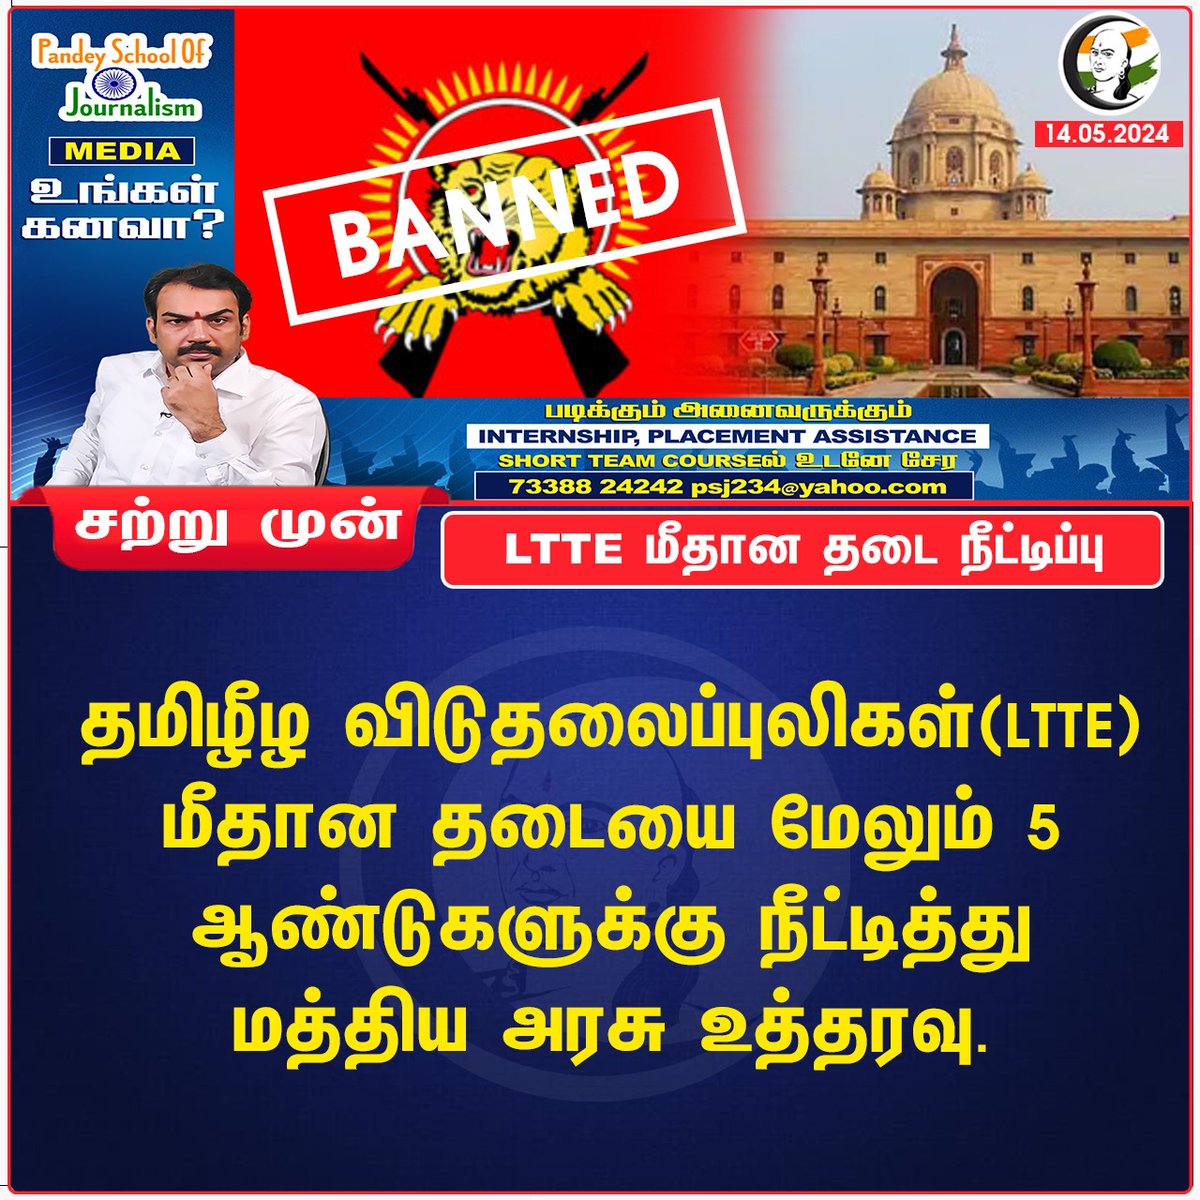 LTTE மீதான தடை நீட்டிப்பு
#LTTE #centralgovt